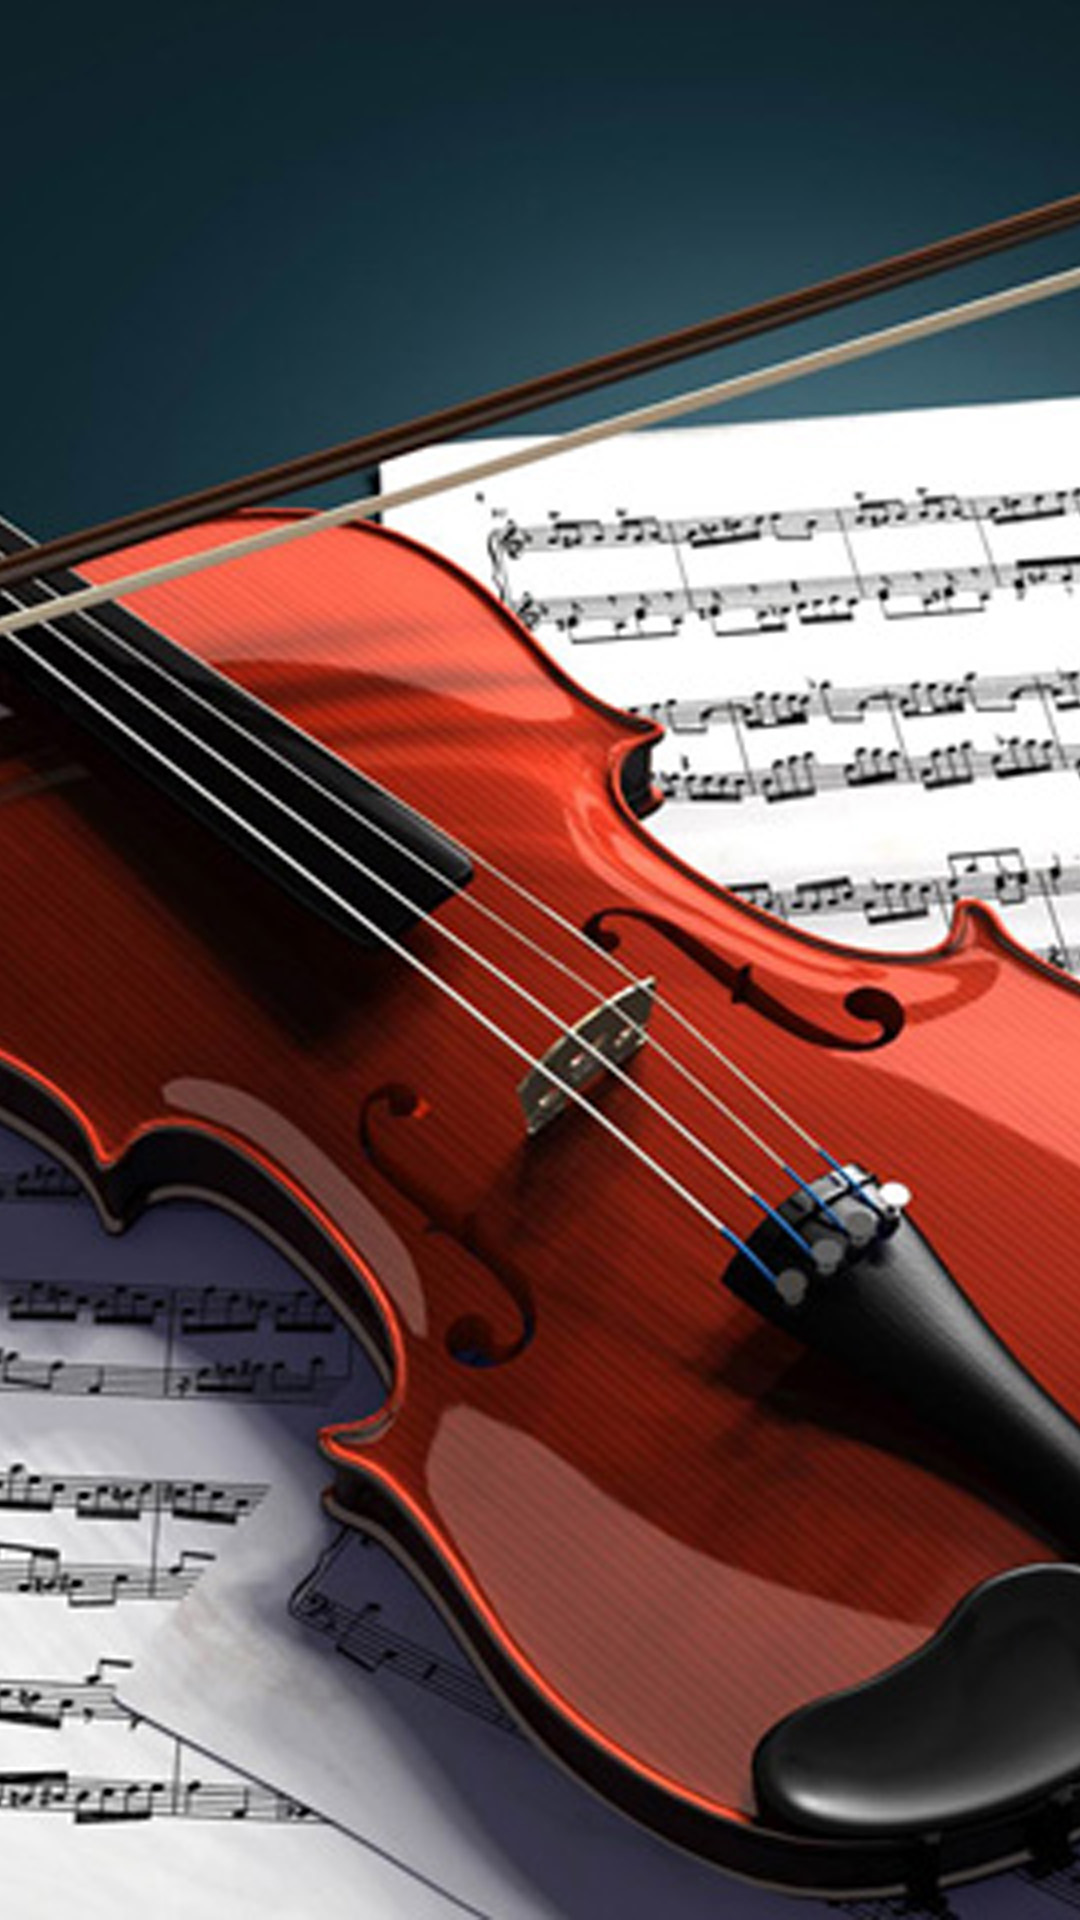 Beautiful Violin Wallpaper For Galaxy S5